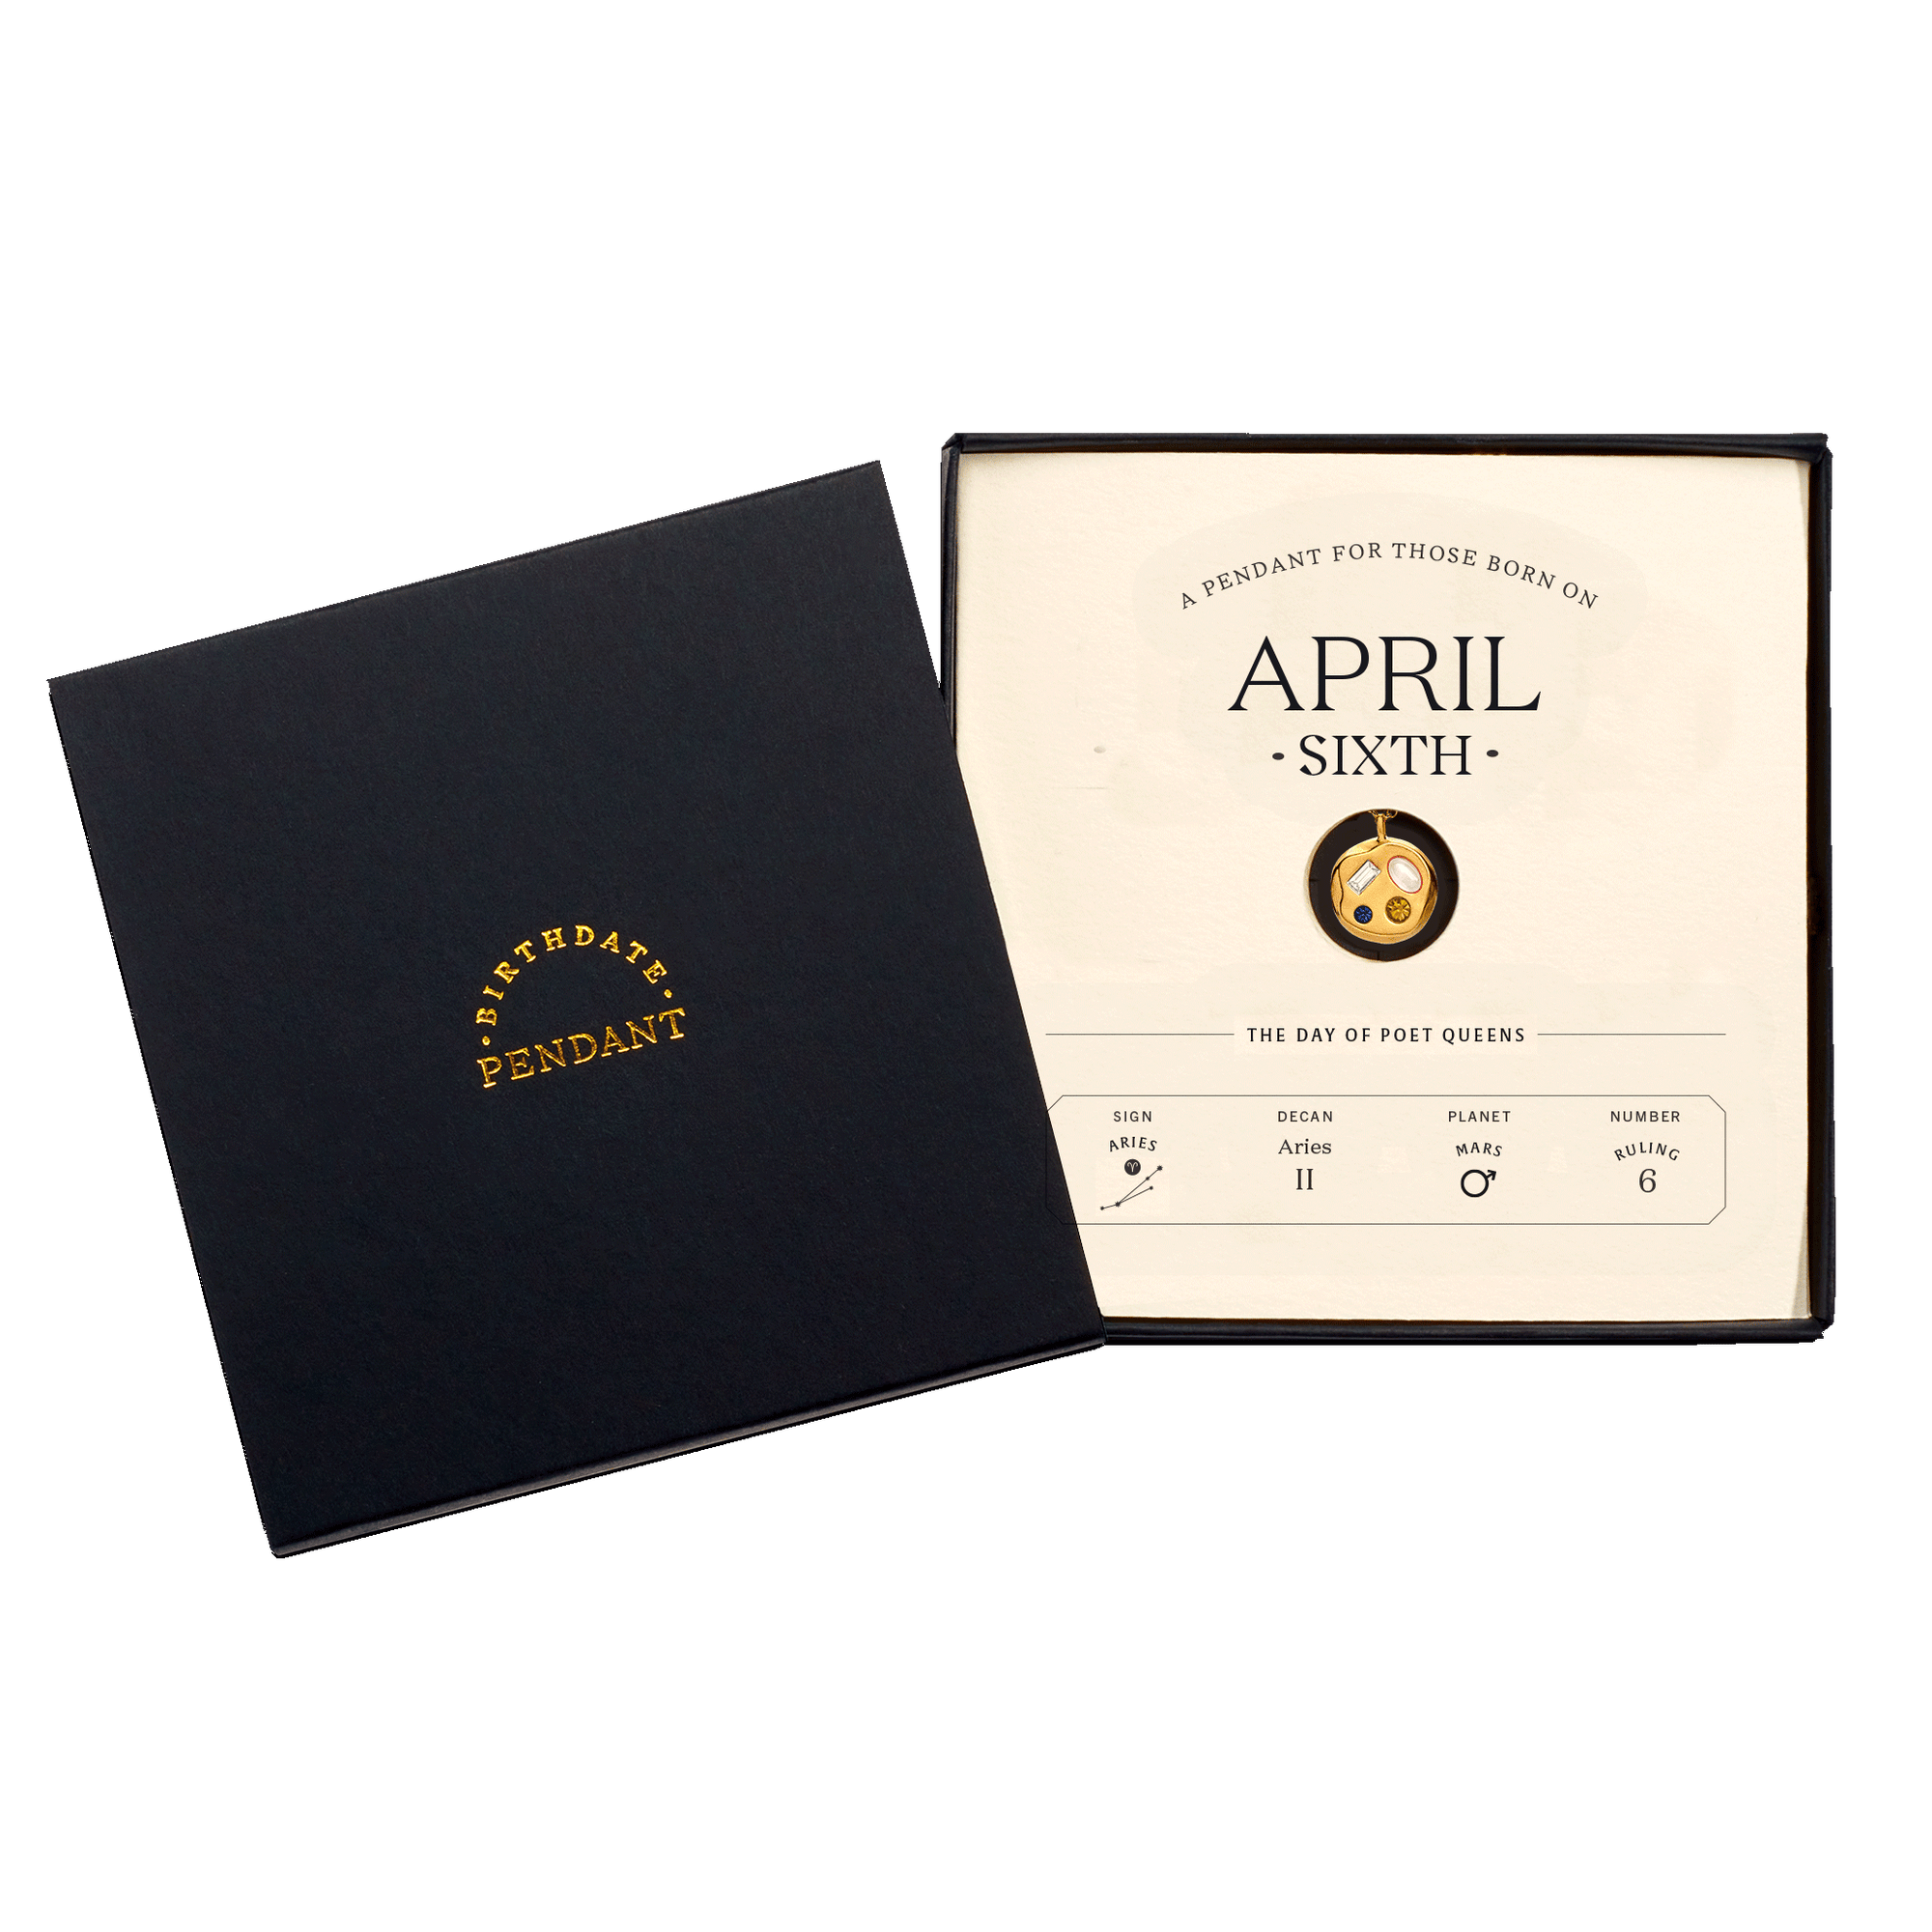 The April Sixth Pendant inside its box